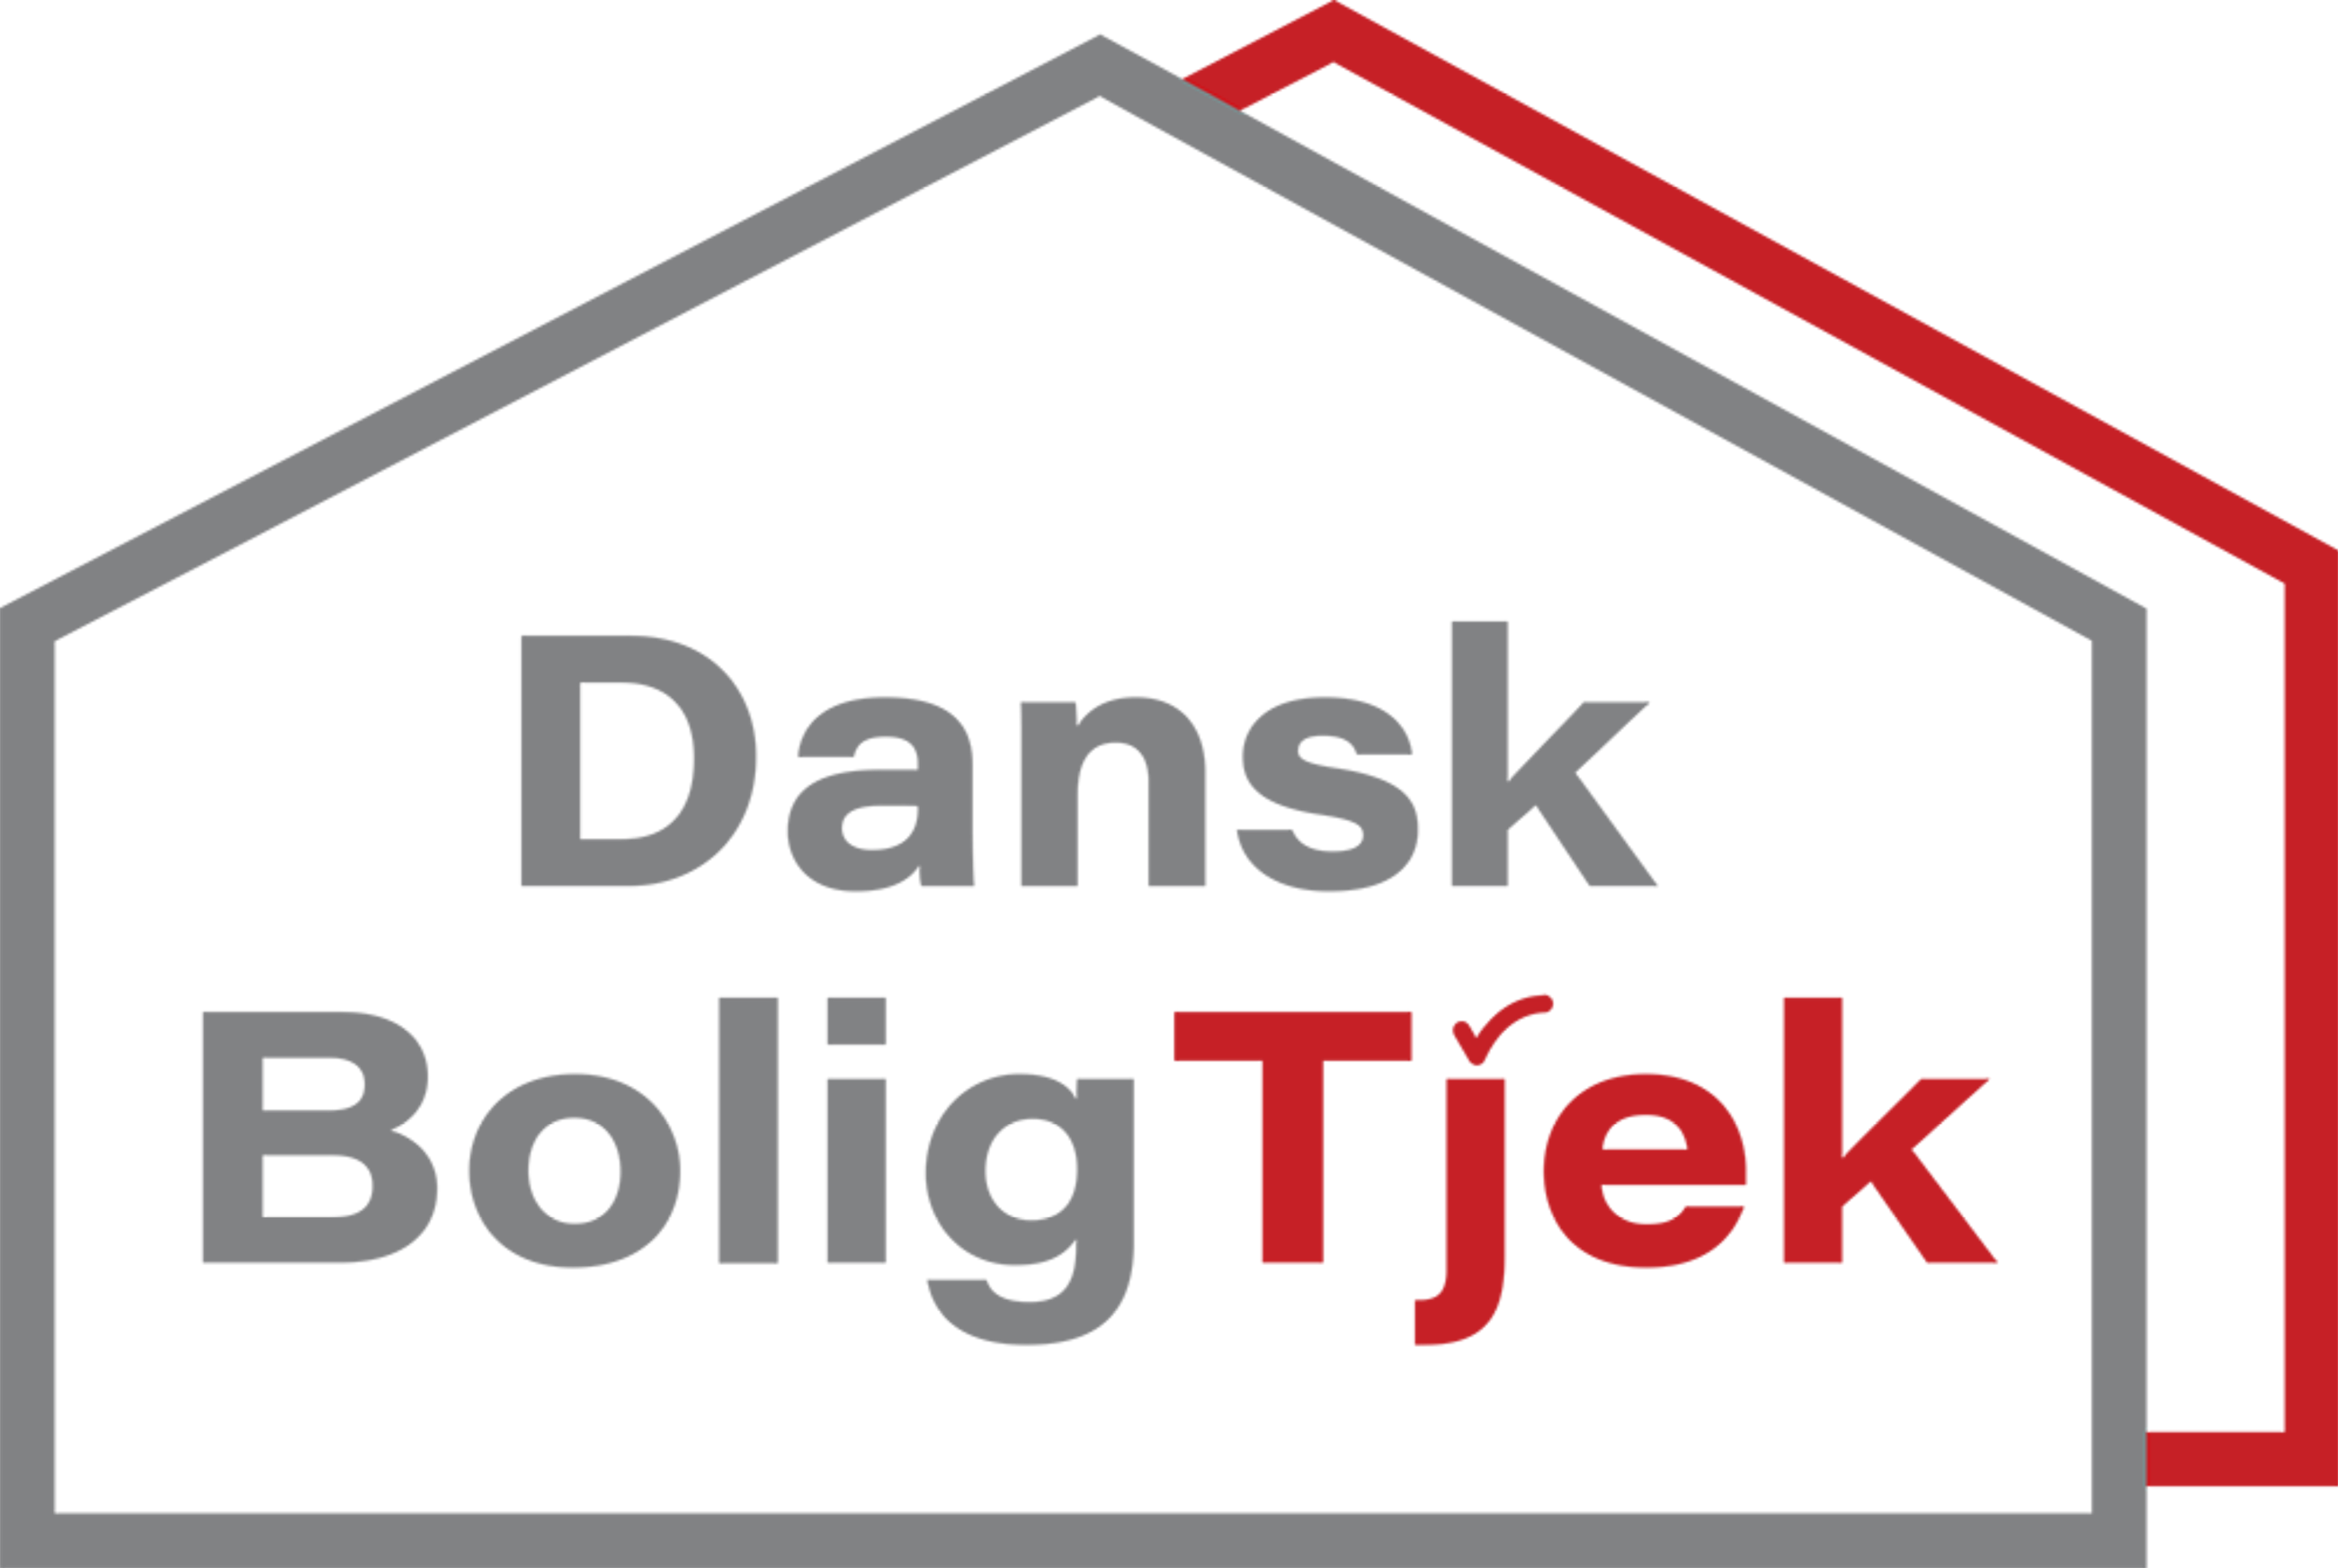 logo-dbt